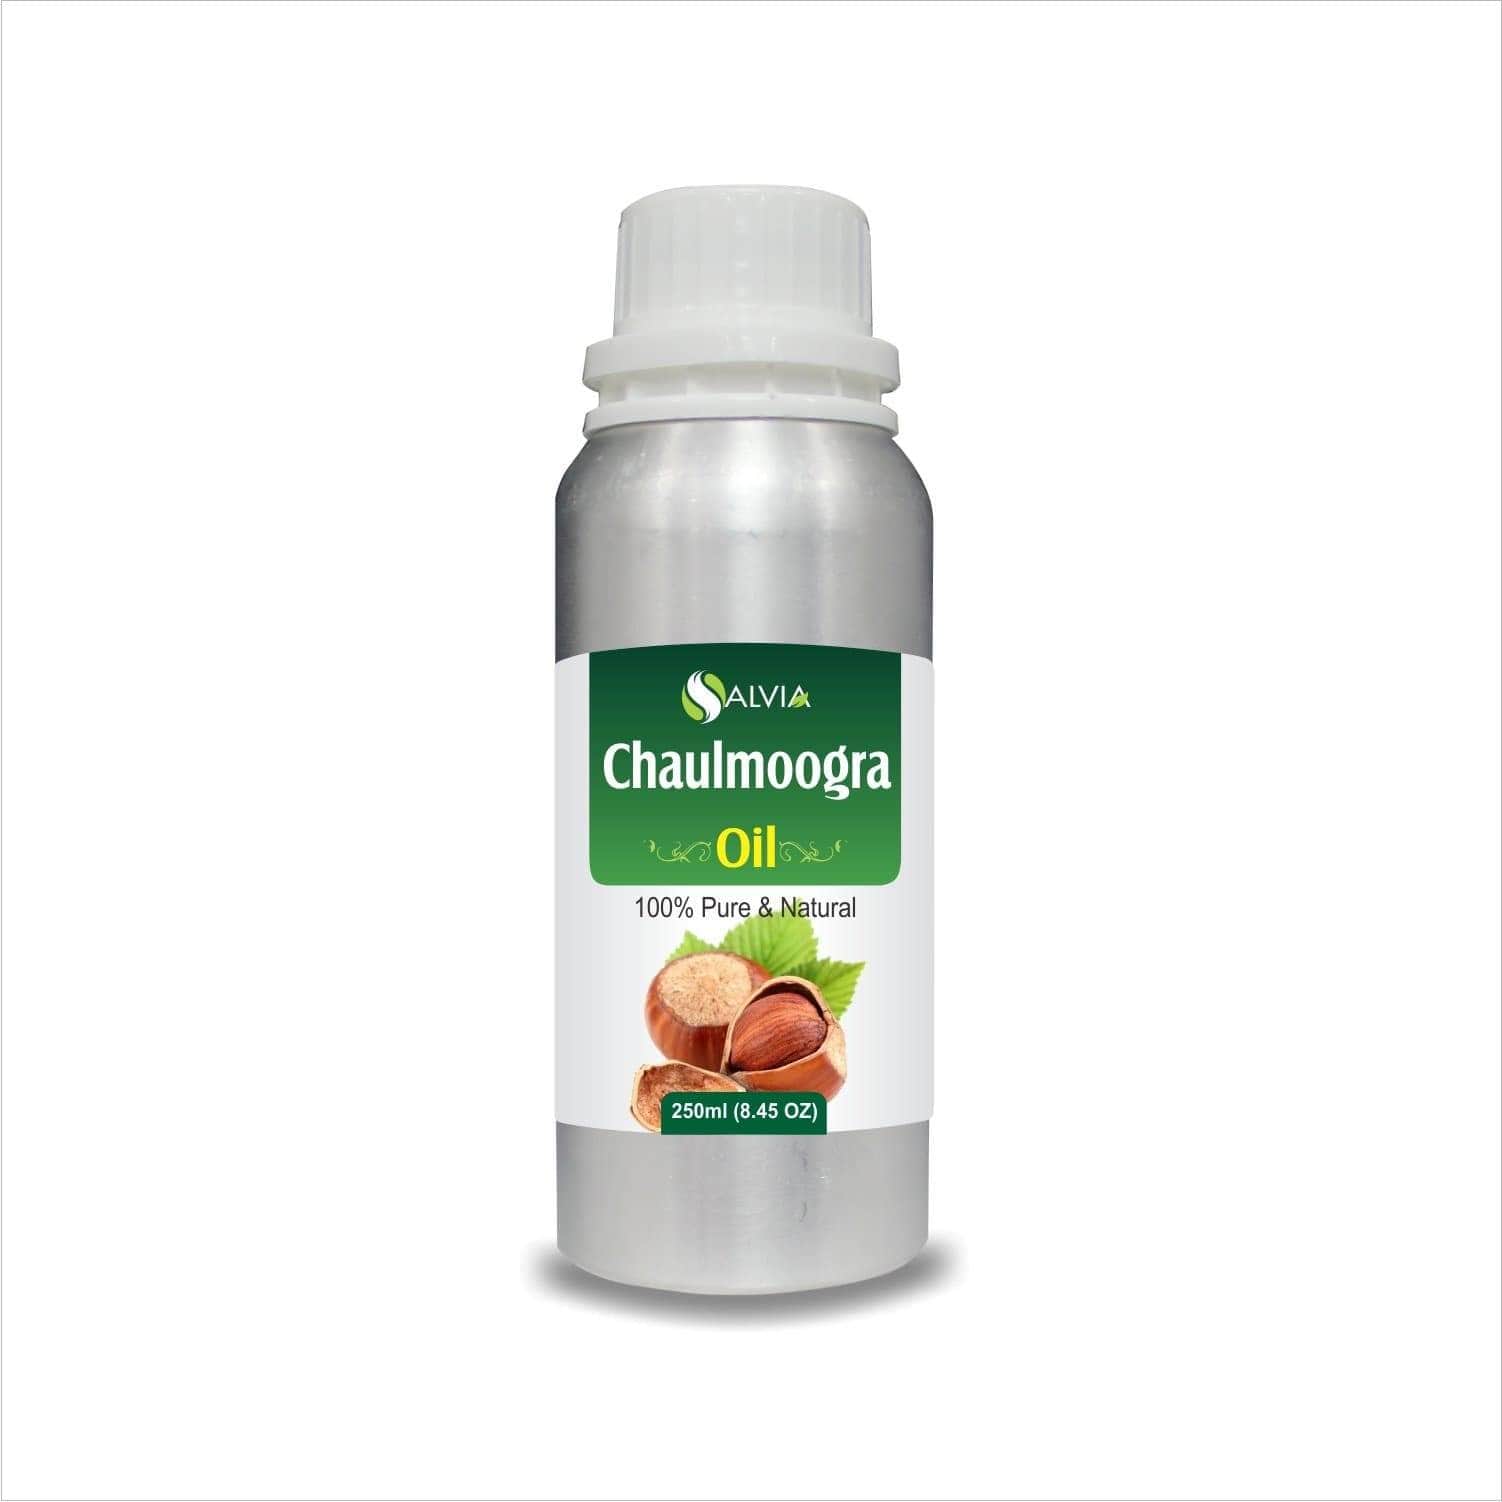 chaulmoogra oil uses